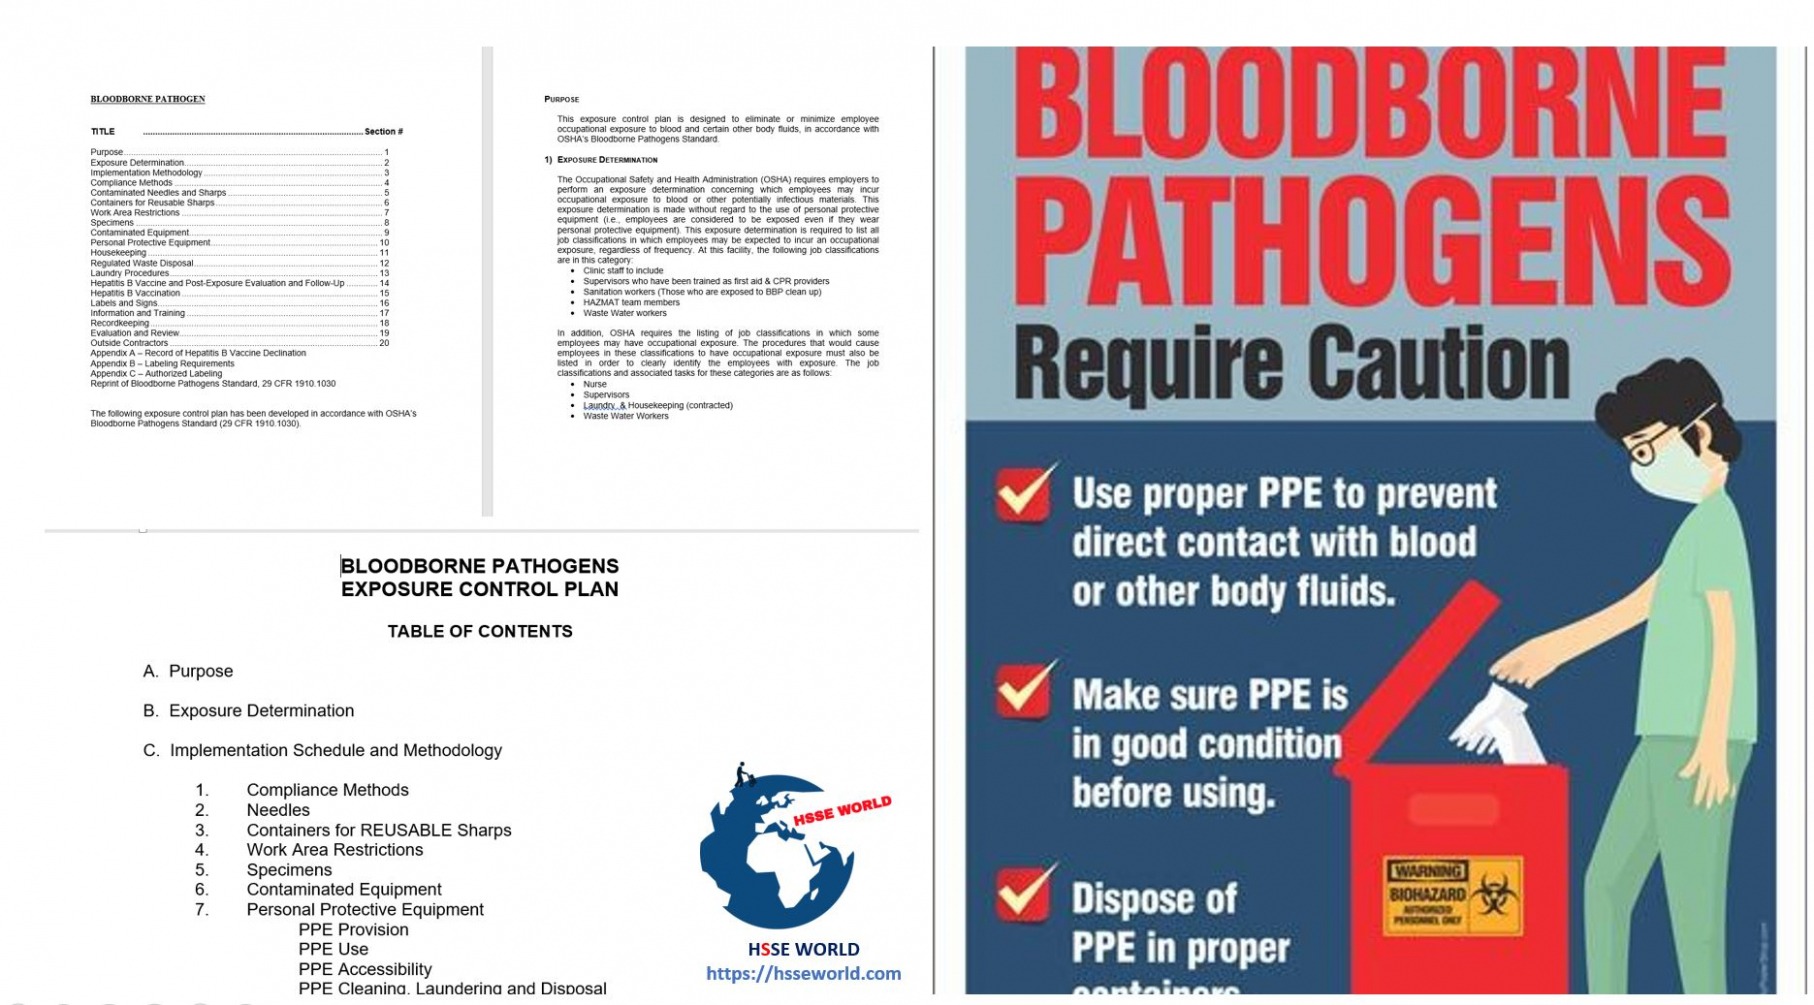  Bloodborne Pathogens Exposure Control Plan Template PPT